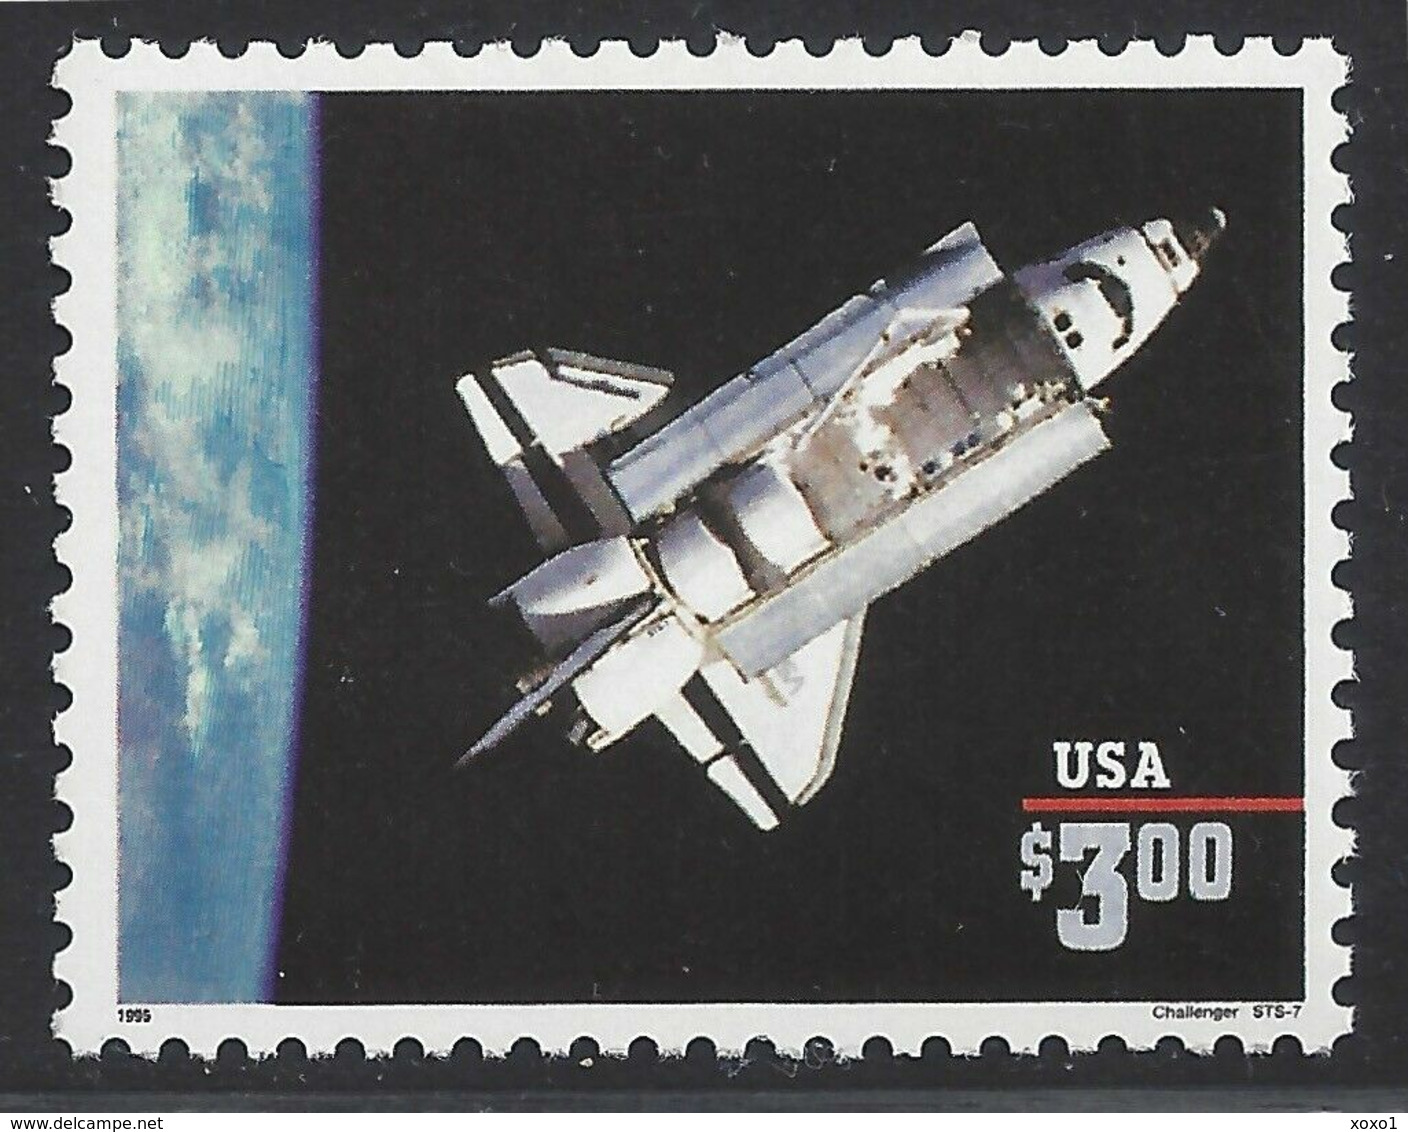 USA 1995 MiNr. 2581 I  CHALLENGER SPACE SHUTTLE 1v  MNH**  7.50 € - United States